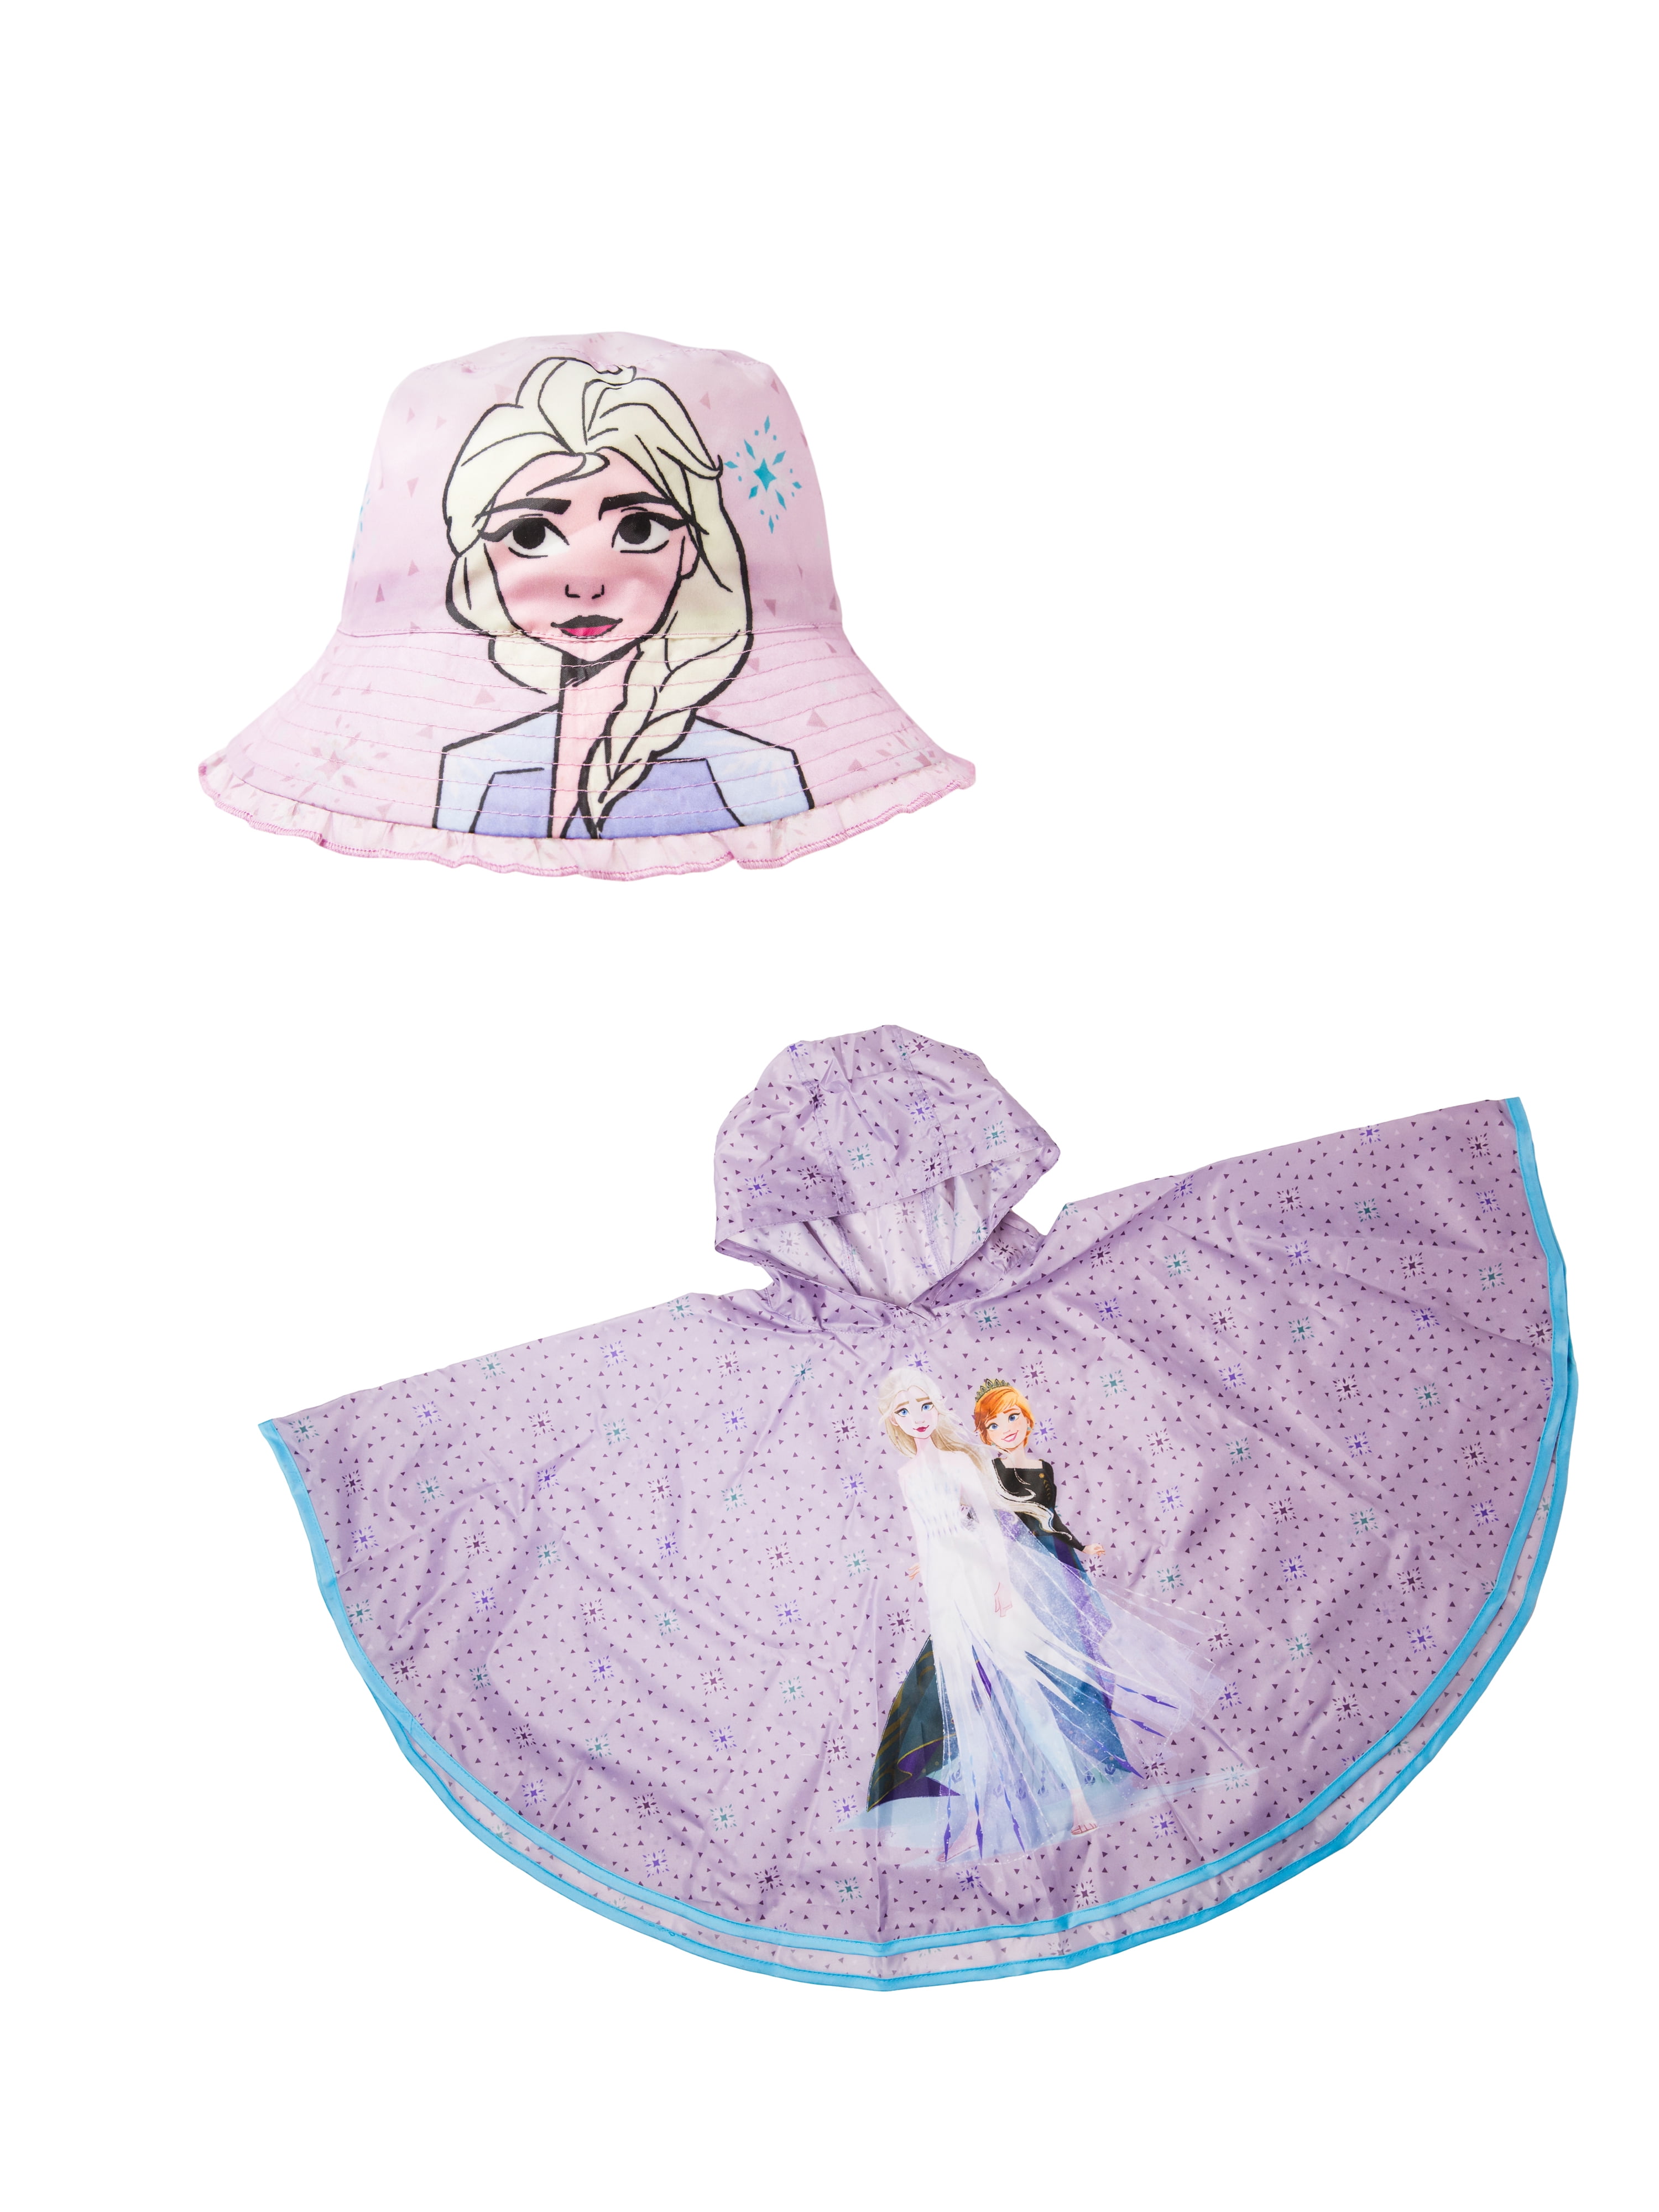 Disney Frozen II Queen Elsa Hooded Raincoat Rain Jacket Poncho Outwear for Girls Toddlers Kids Children